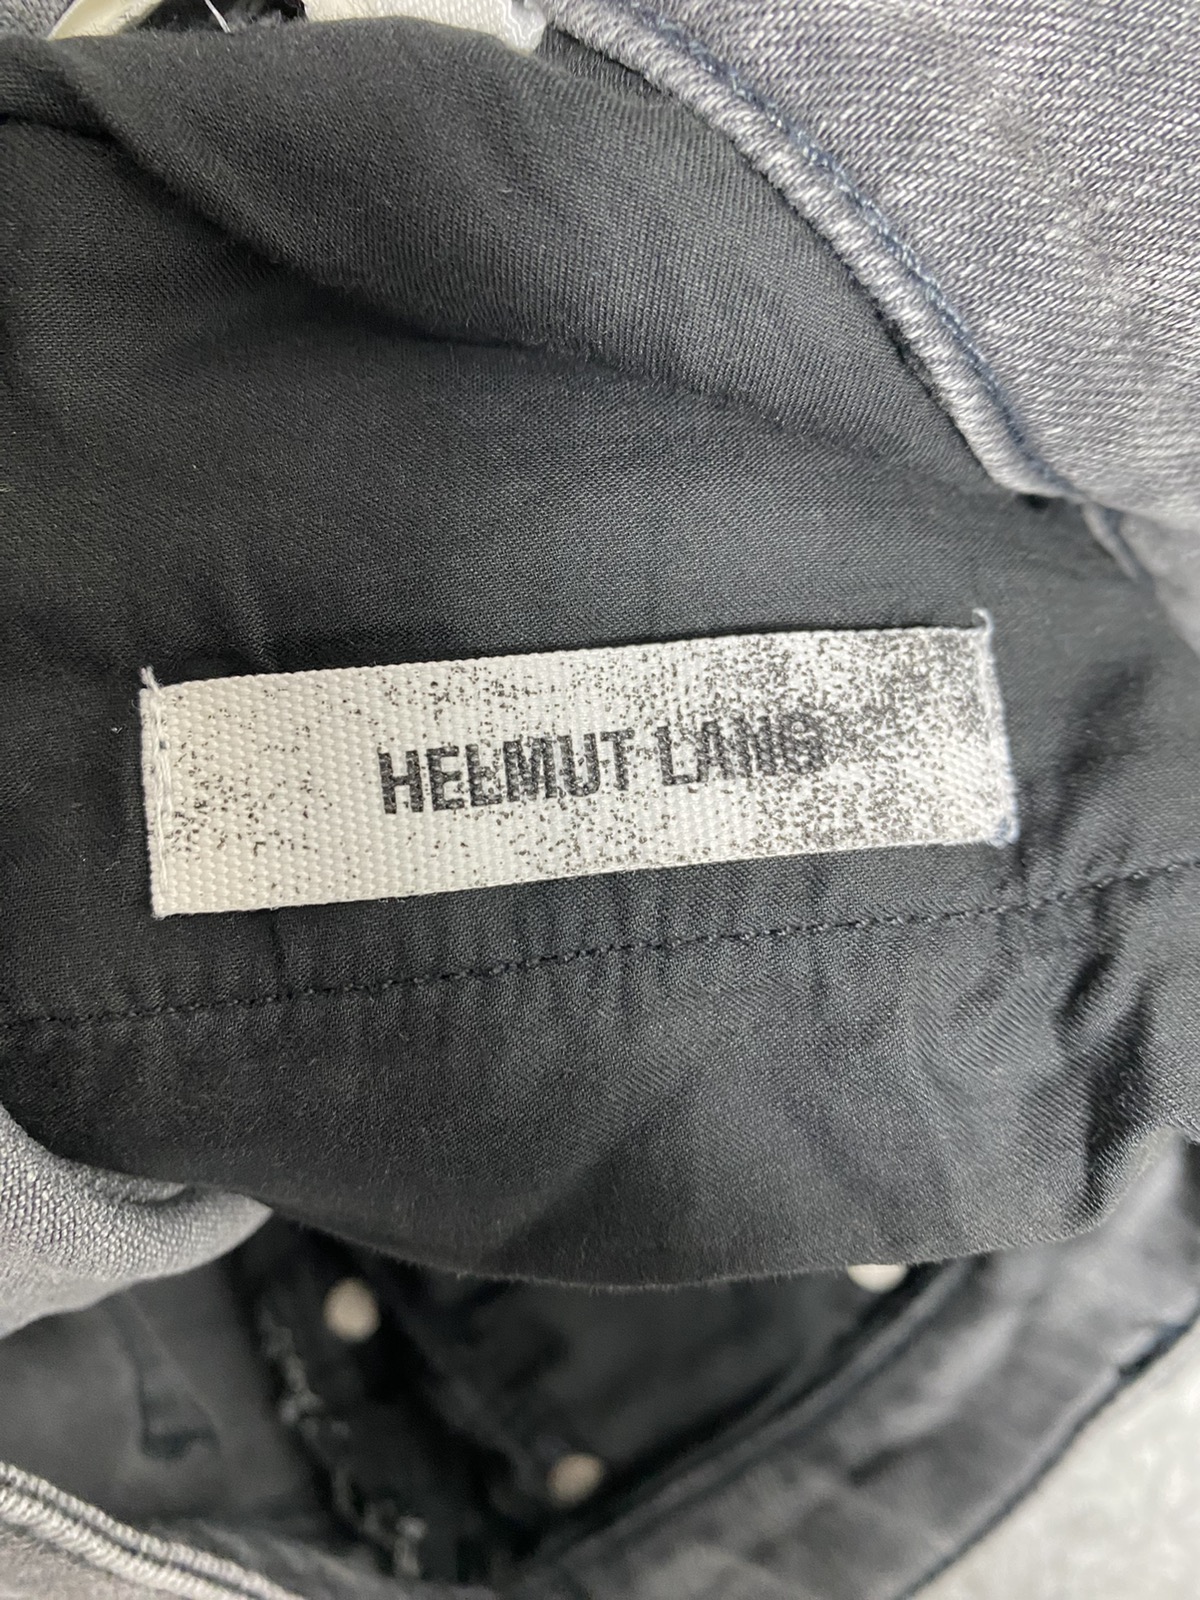 Helmut Lang Skinny Jeans. S0206 - 8